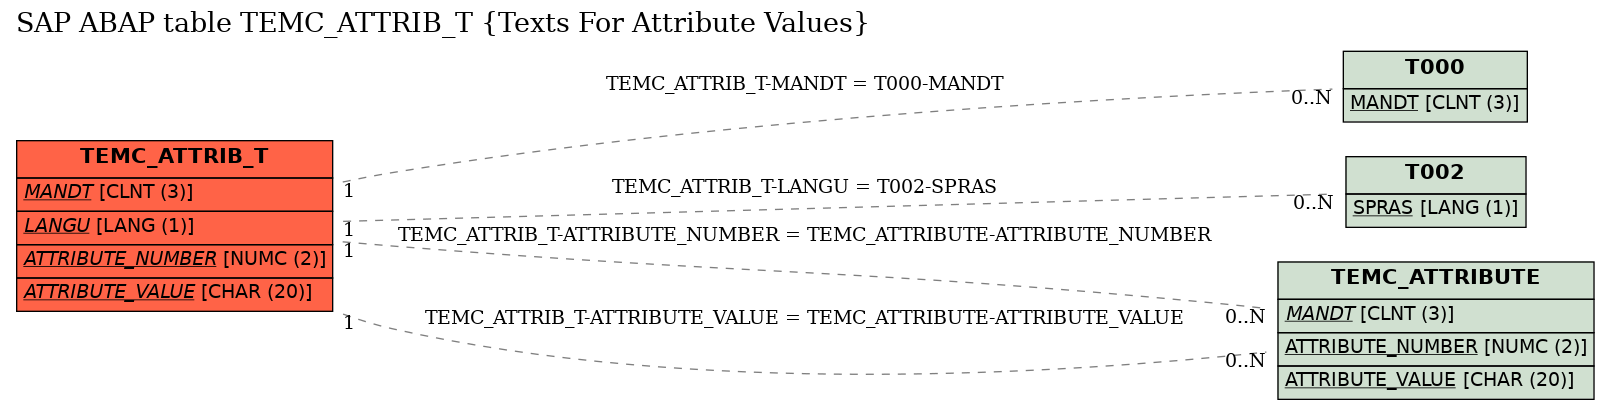 E-R Diagram for table TEMC_ATTRIB_T (Texts For Attribute Values)